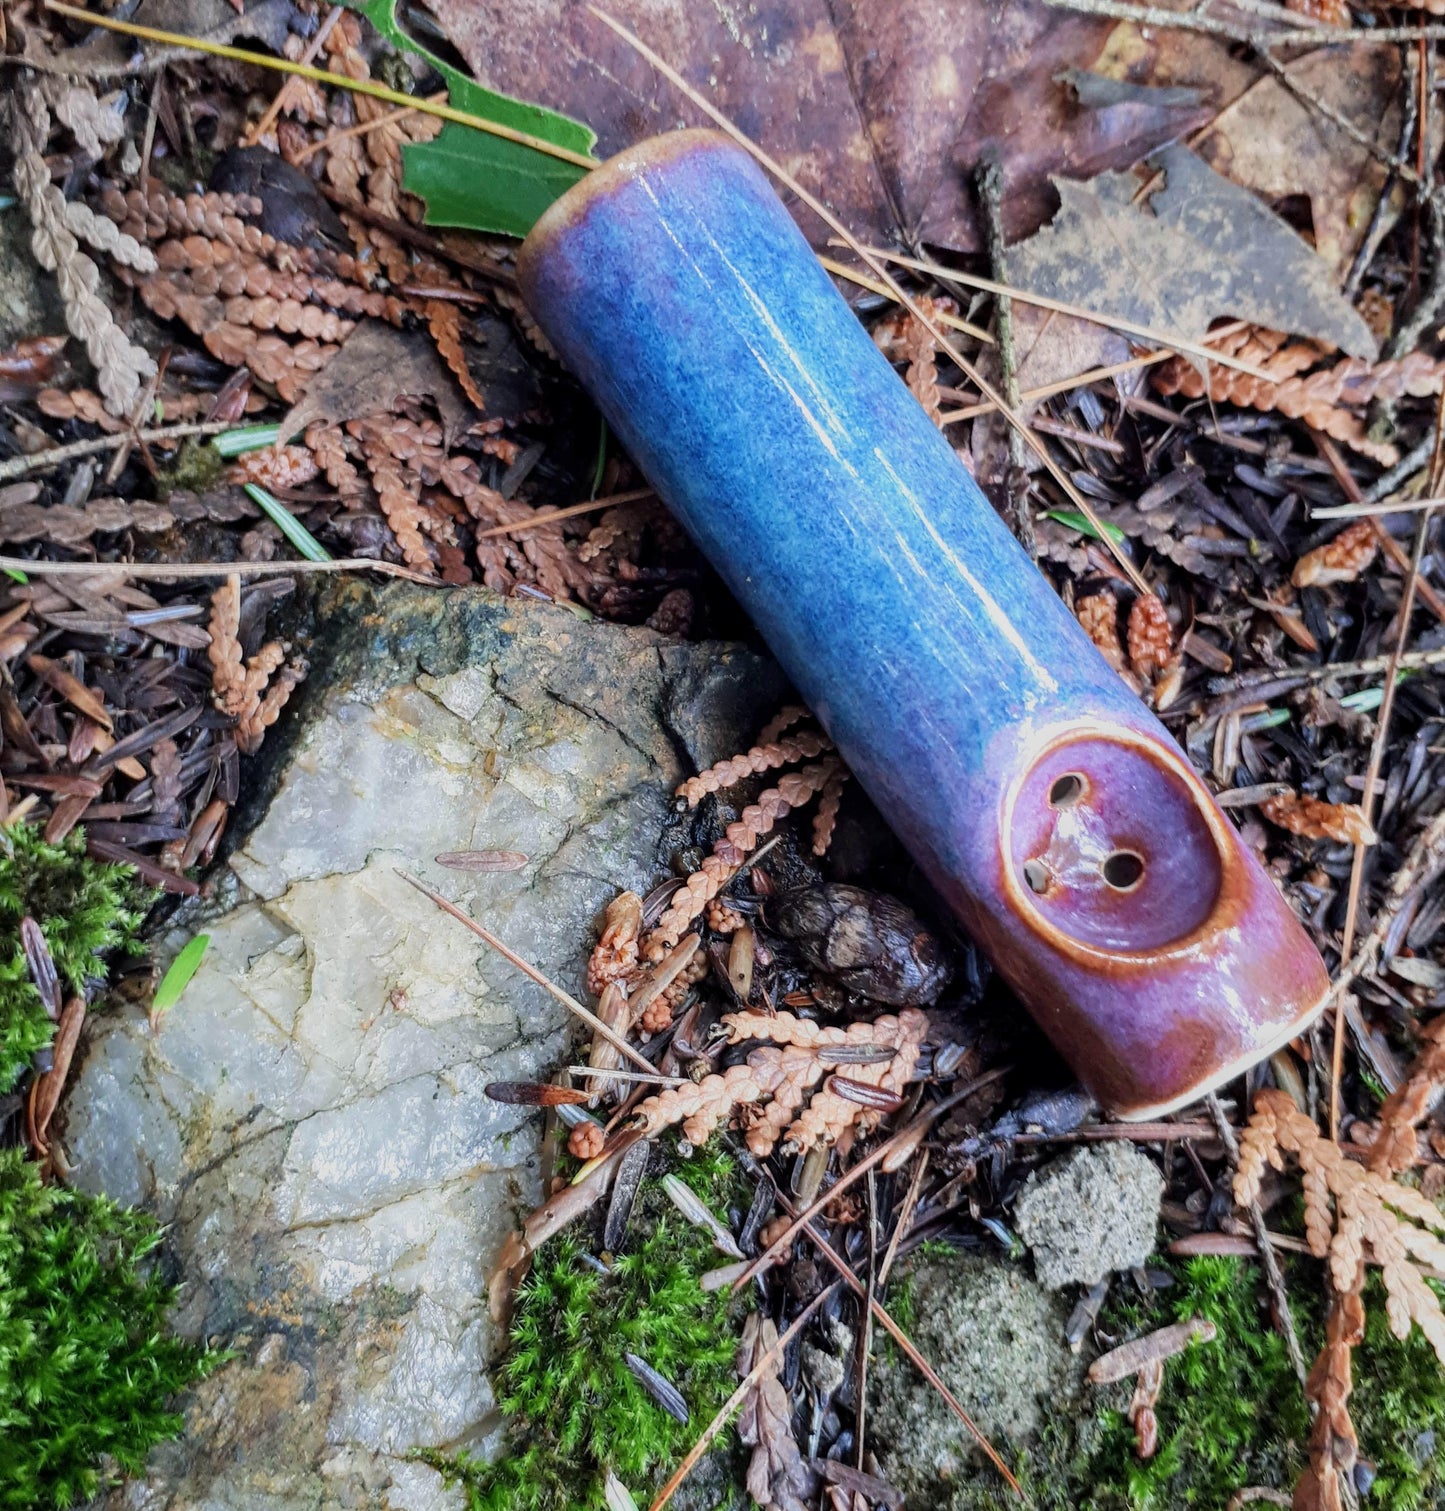 Blue rain, purple and blue mini purse pipe on quartz and leaves